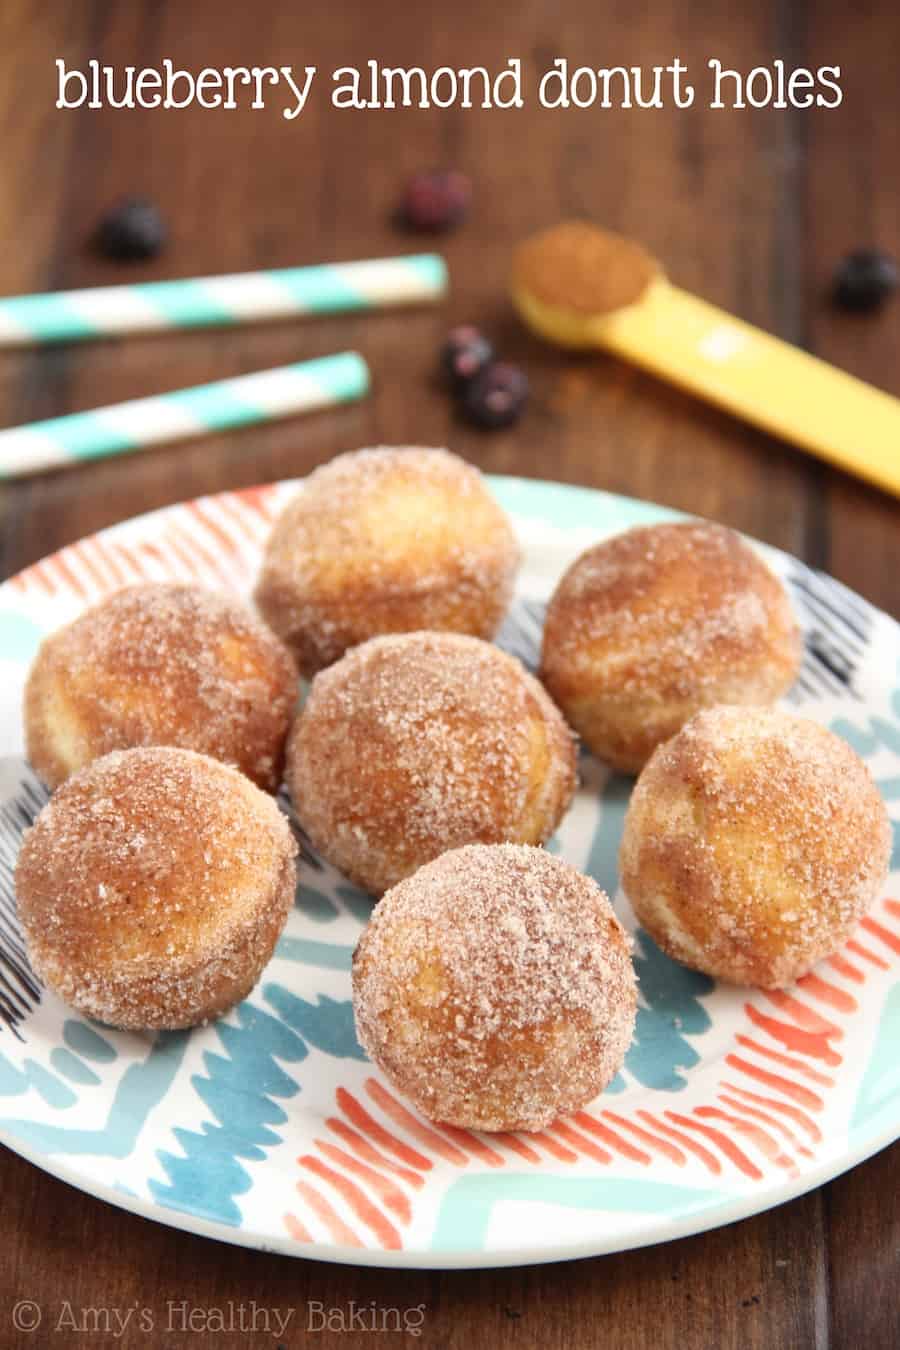 Blueberry almond donut holes